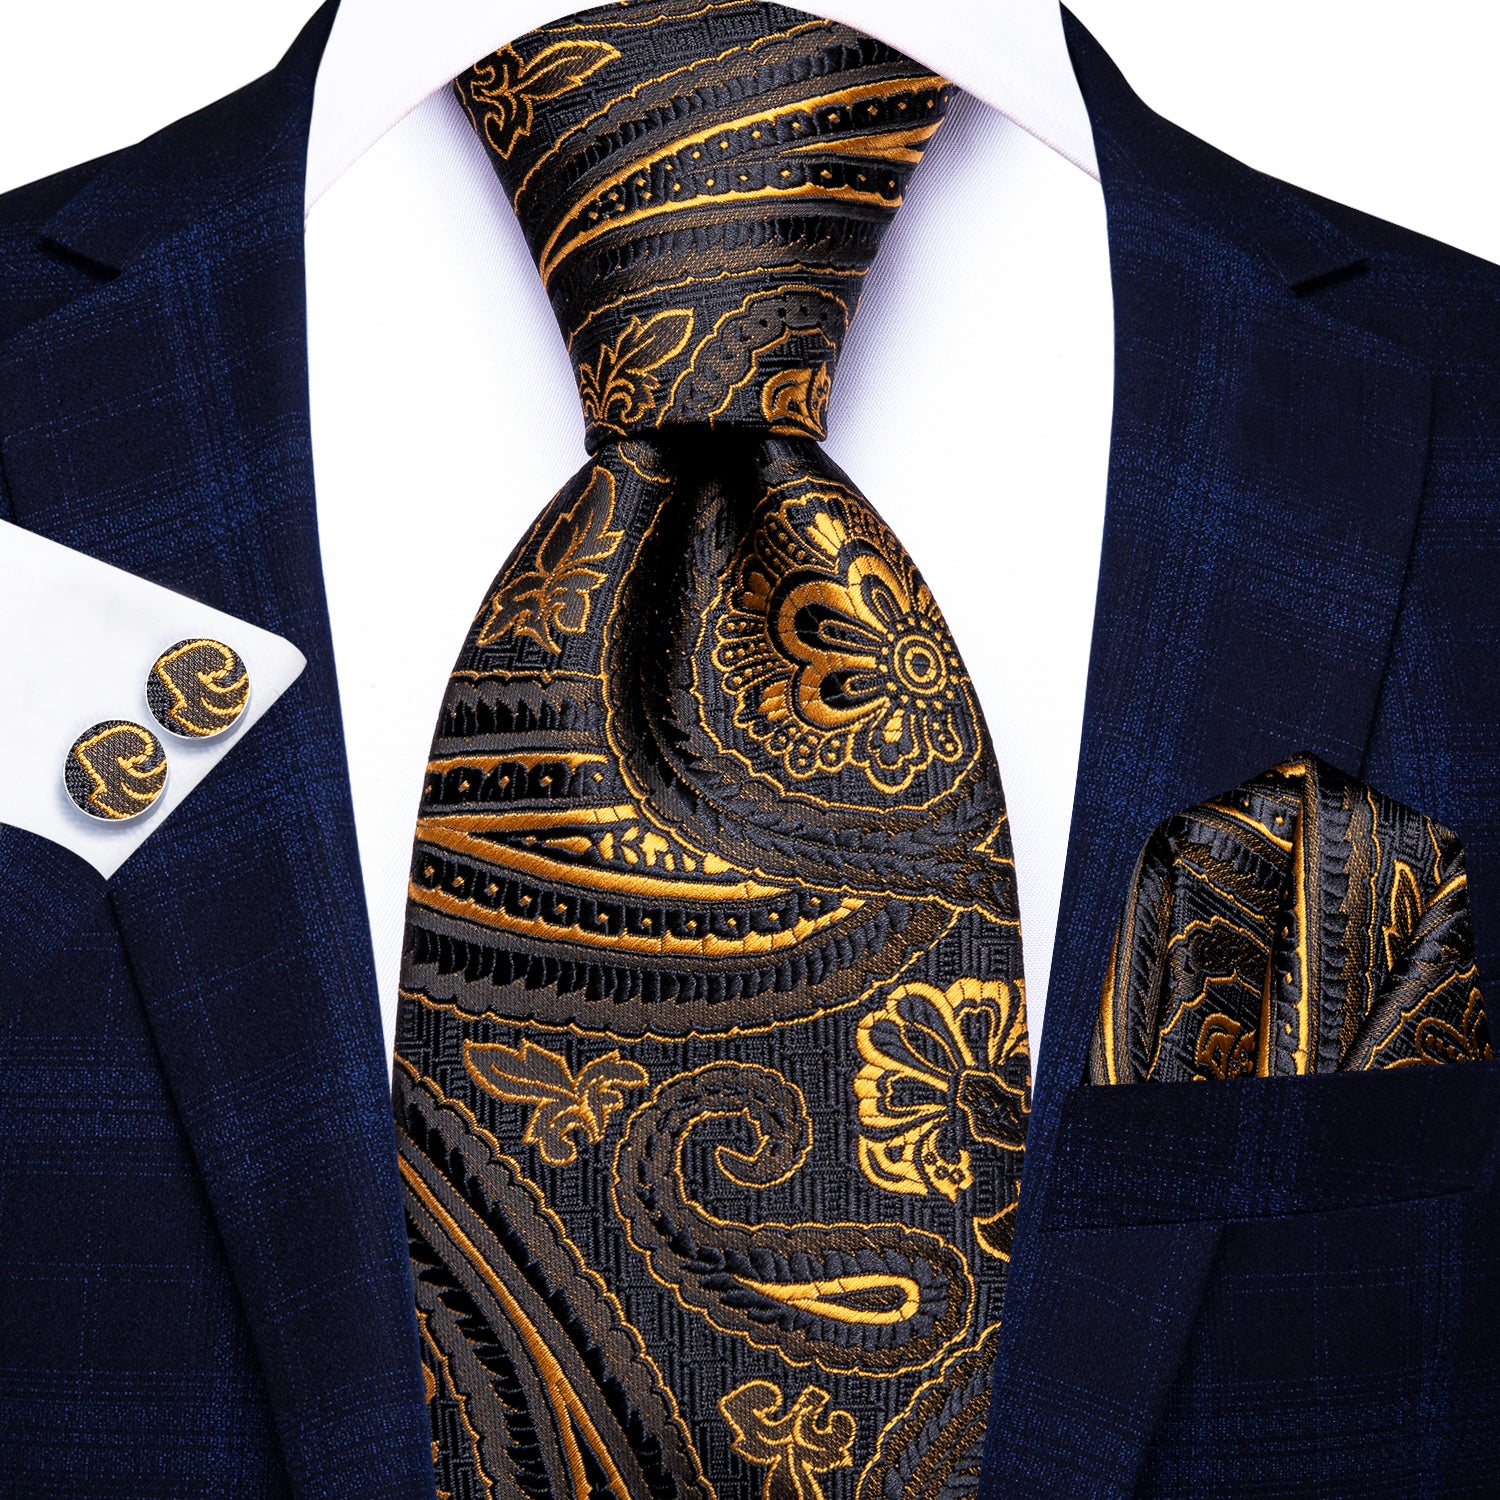 Hi-Tie Blue Gold Paisley Men's Tie Pocket Square Cufflinks Set